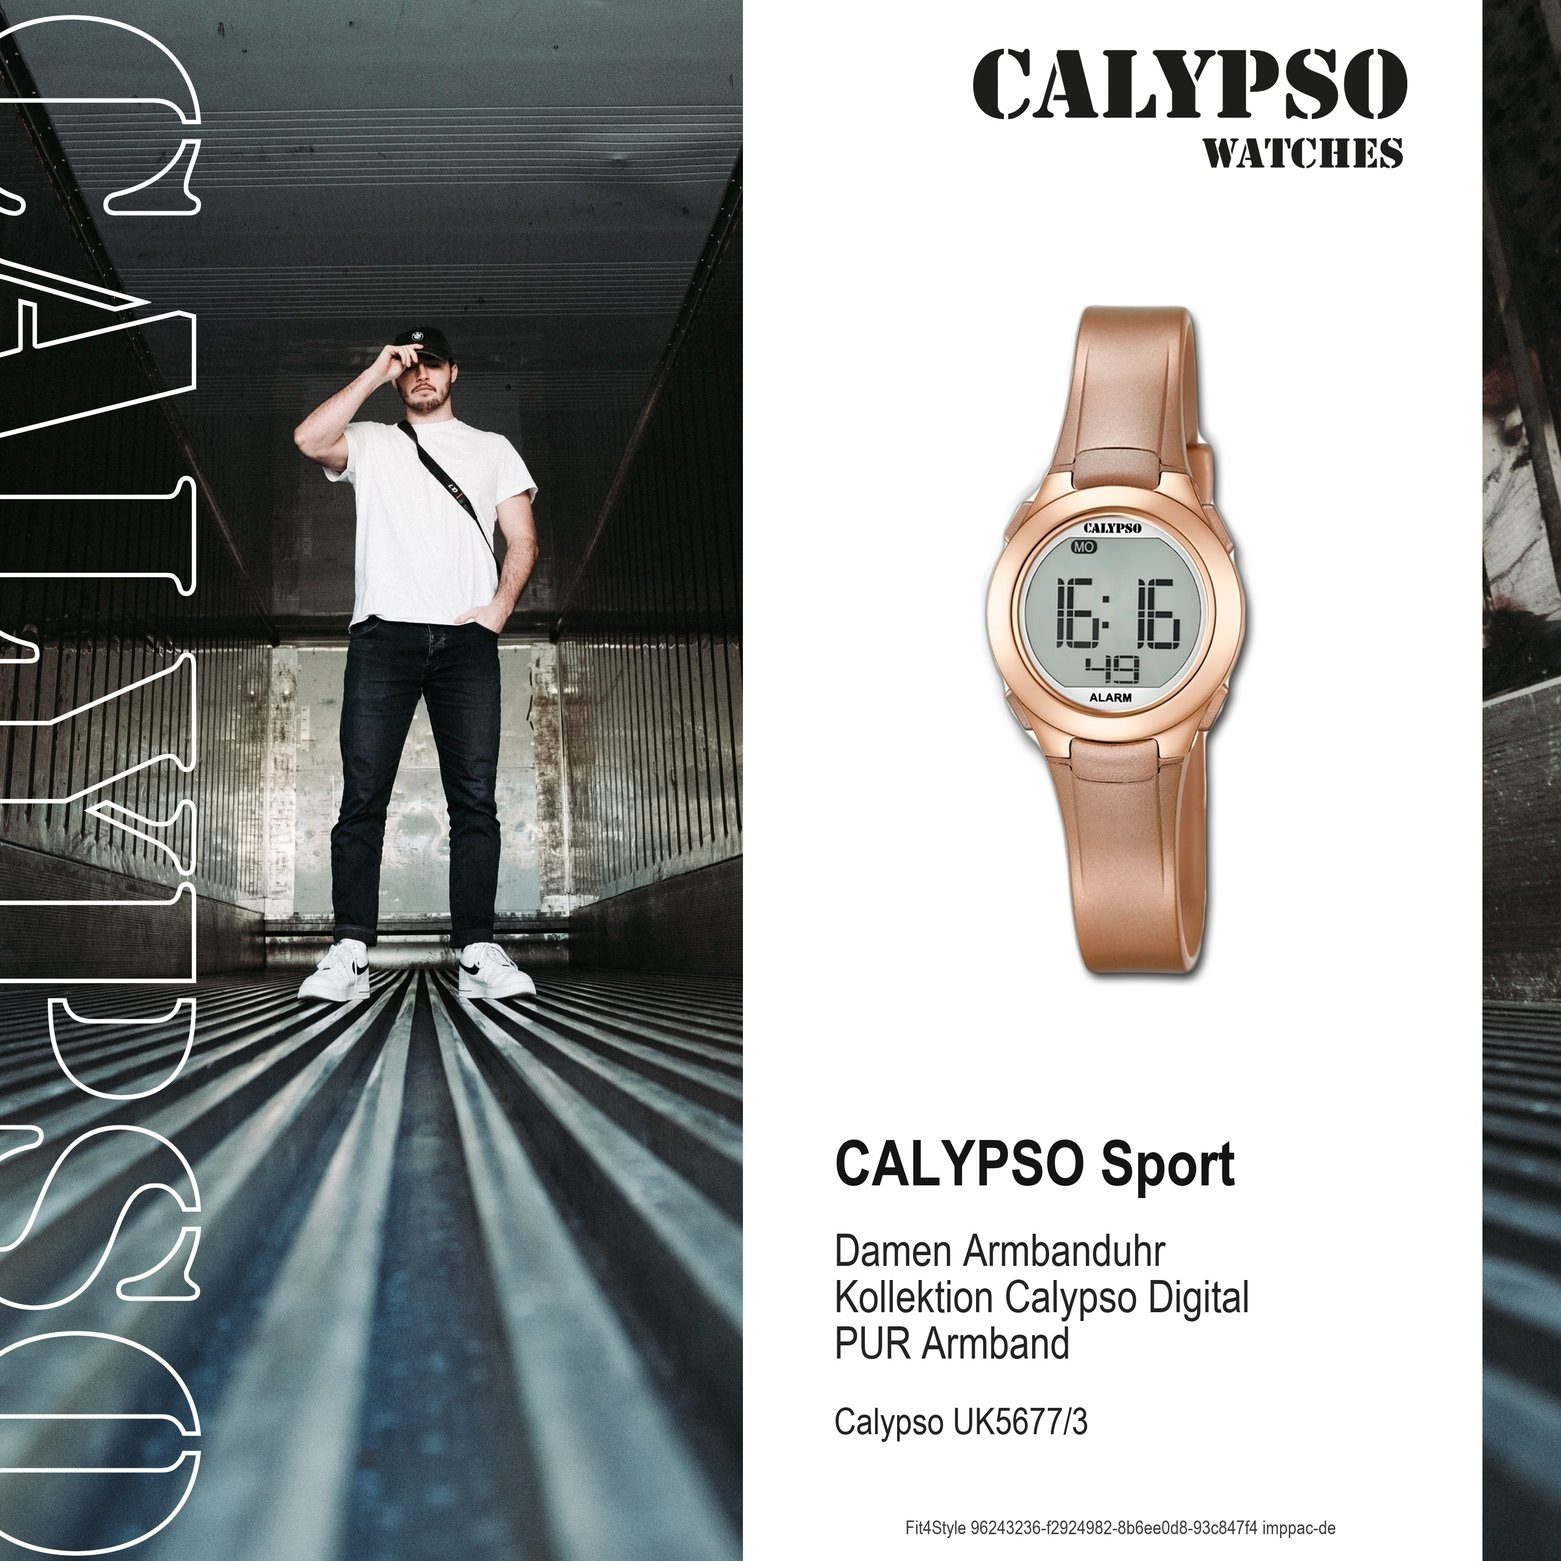 Sport K5677/3 PURarmband Kunststoffband, Damen Calypso WATCHES roségold, Uhr Armbanduhr Damen CALYPSO Digitaluhr rund,